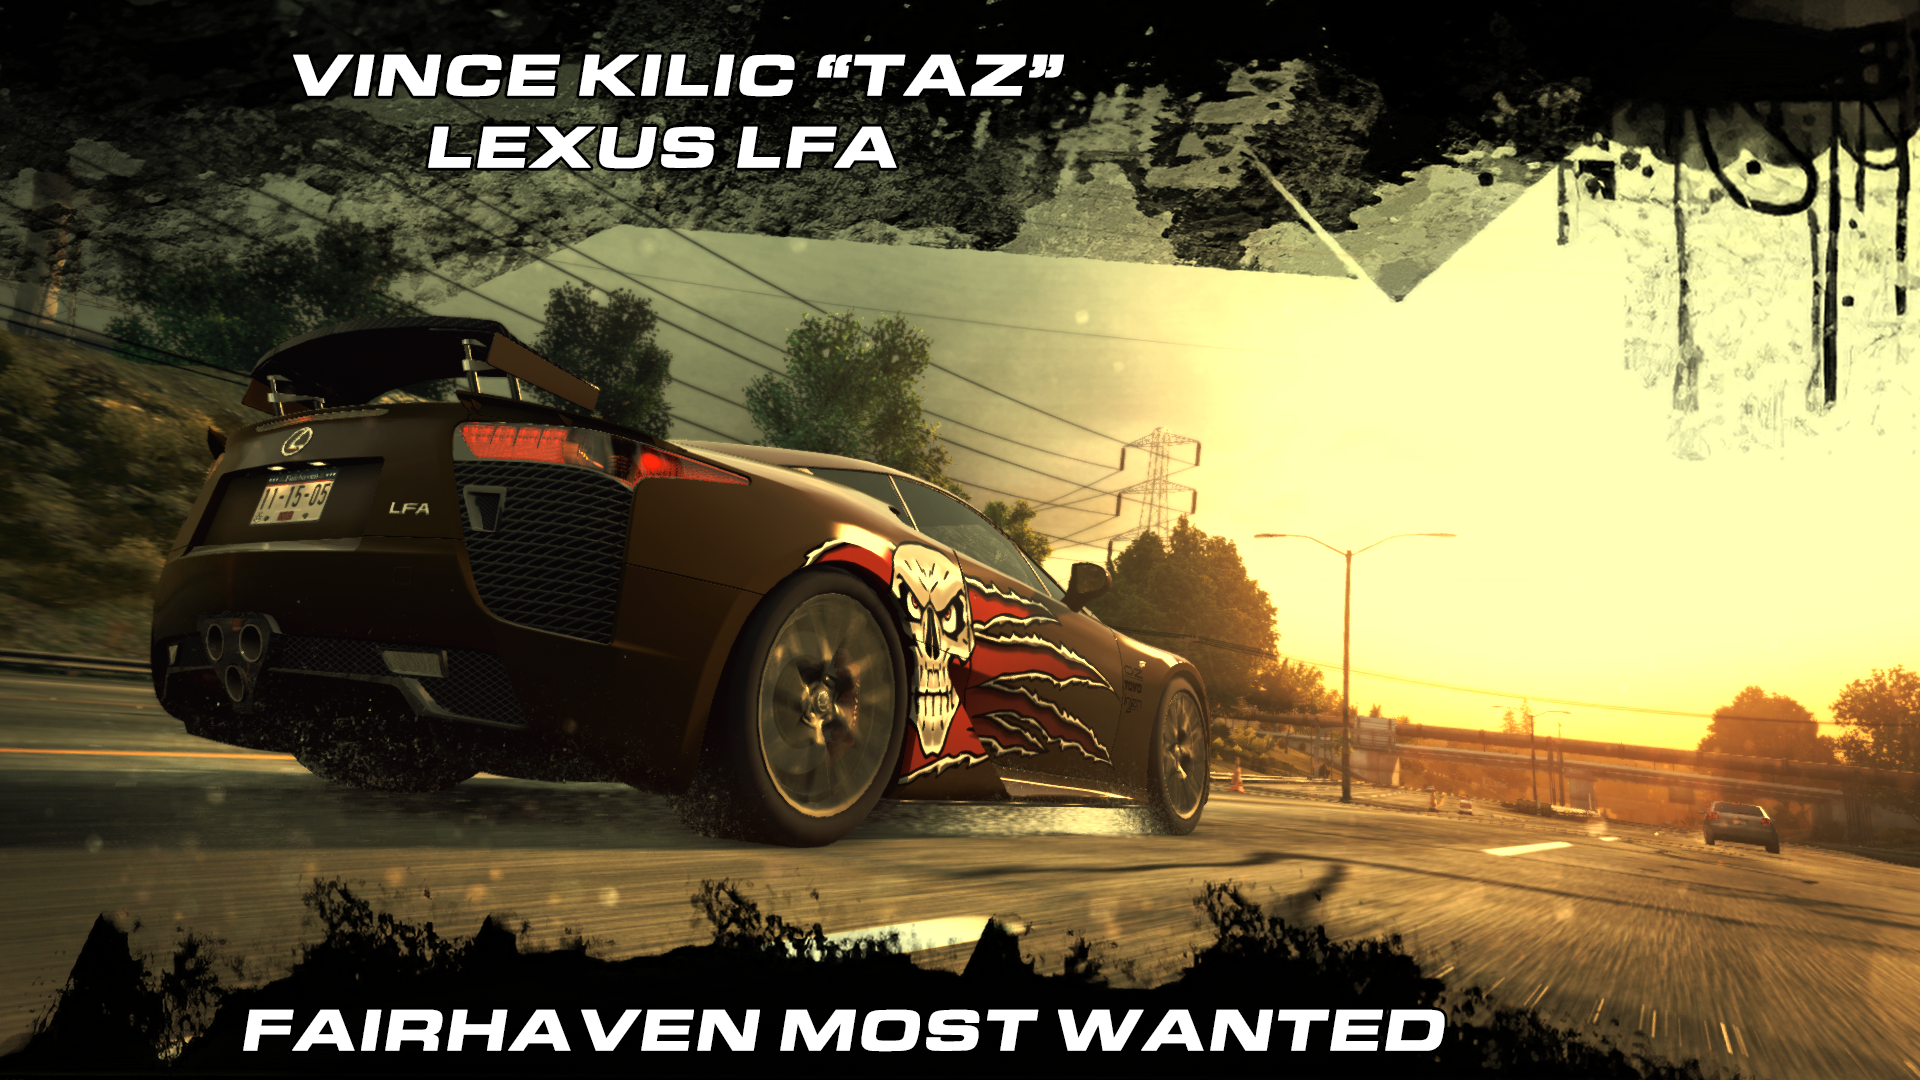 Need For Speed Most Wanted 2012 Lexus Vince Kilic "Taz" LFA